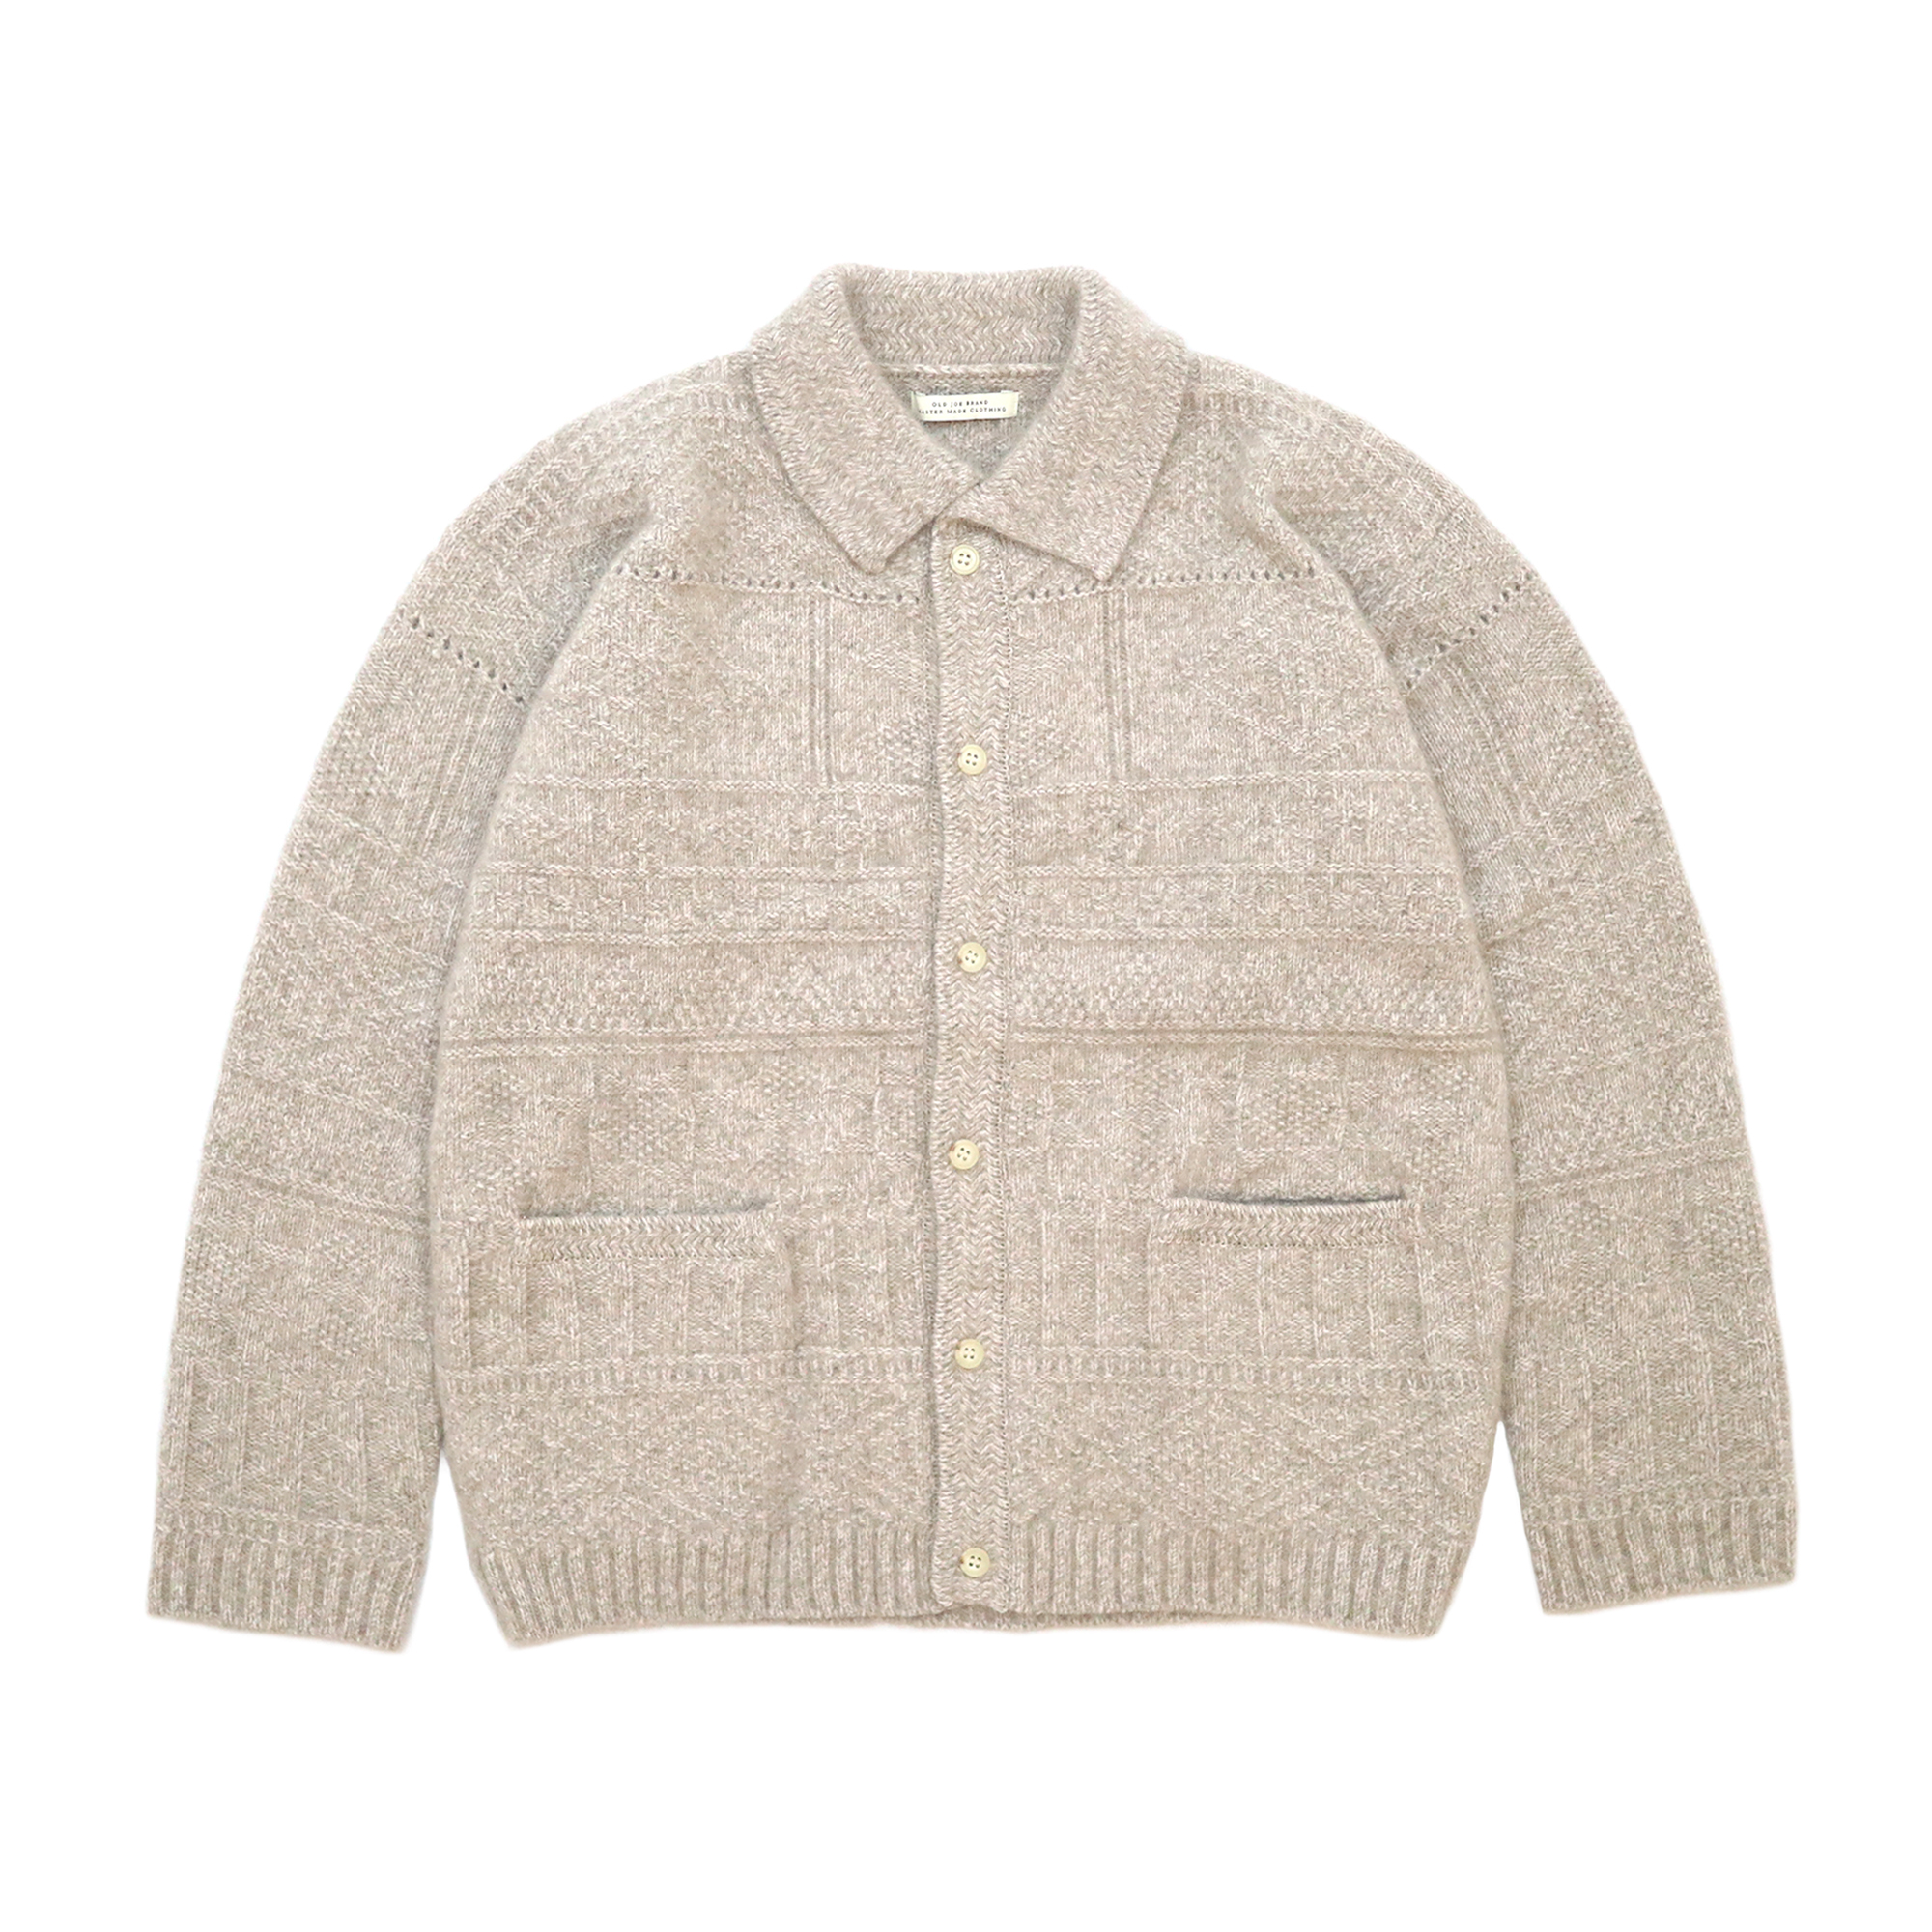 Old Joe Brand - Racoon Guernsey Buttoned Sweater (Fog)